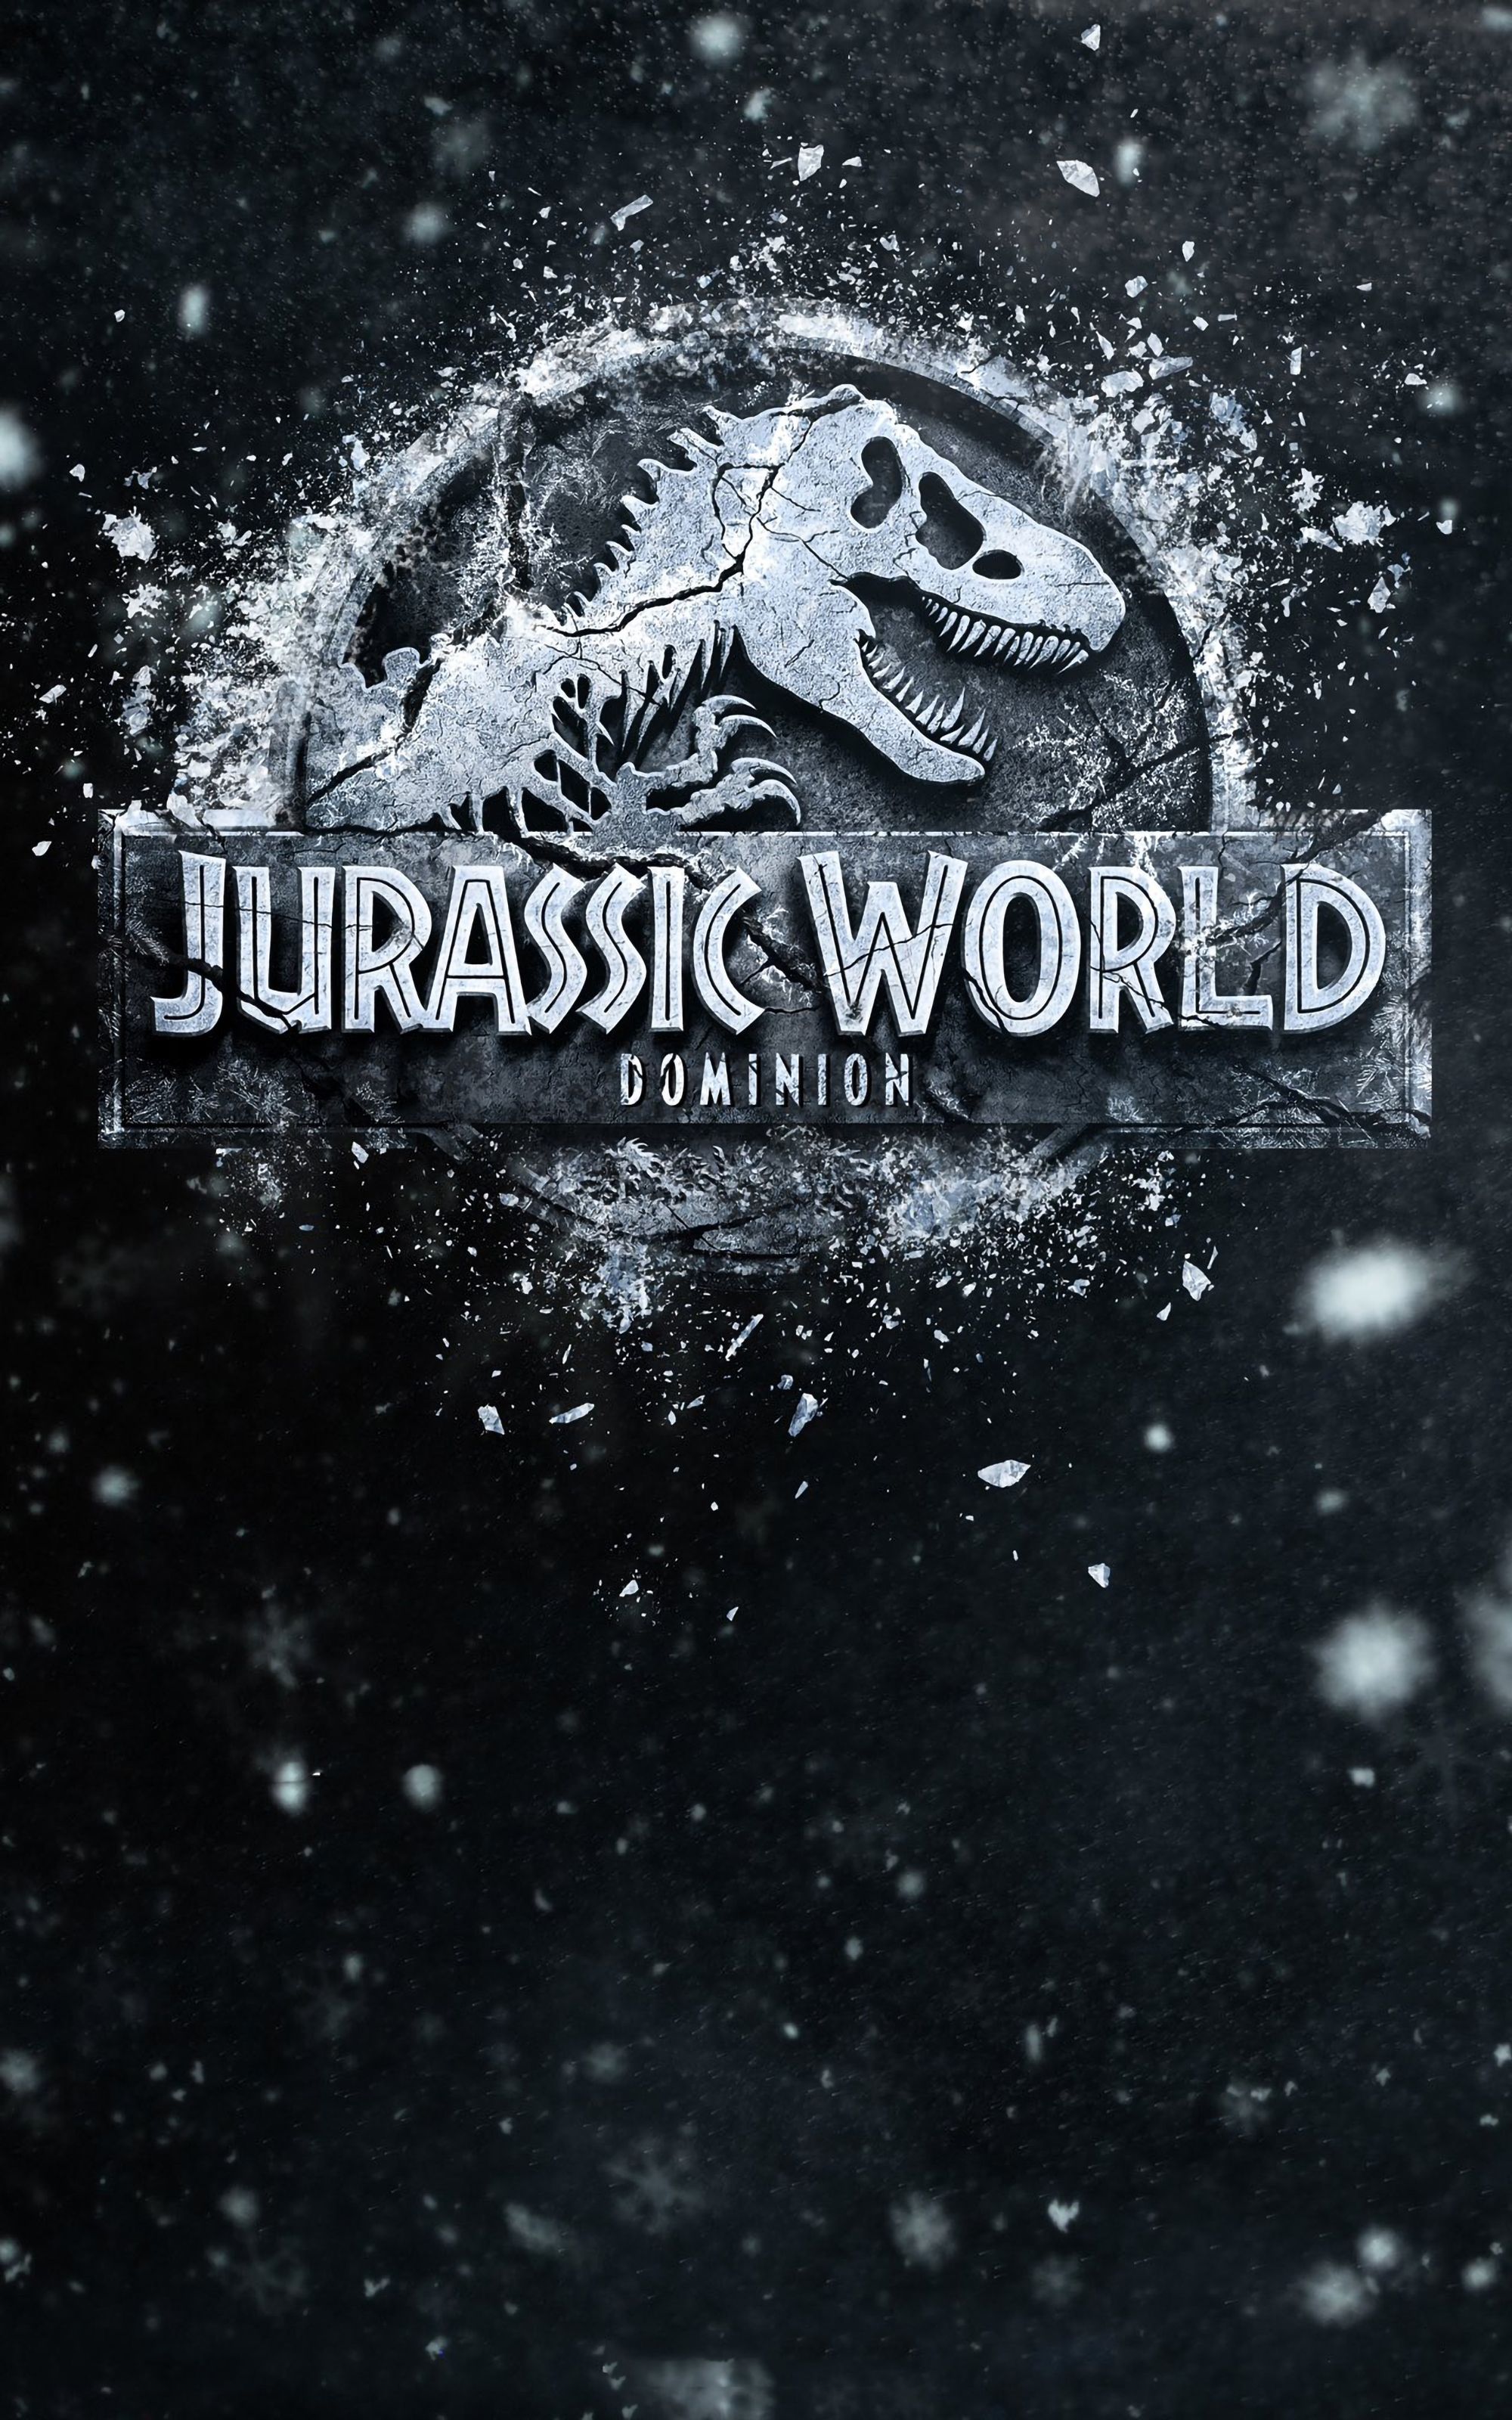 Jurassic World 3 Dominion Fan Art Wallpaper, HD Movies 4K Wallpaper, Image, Photo and Background